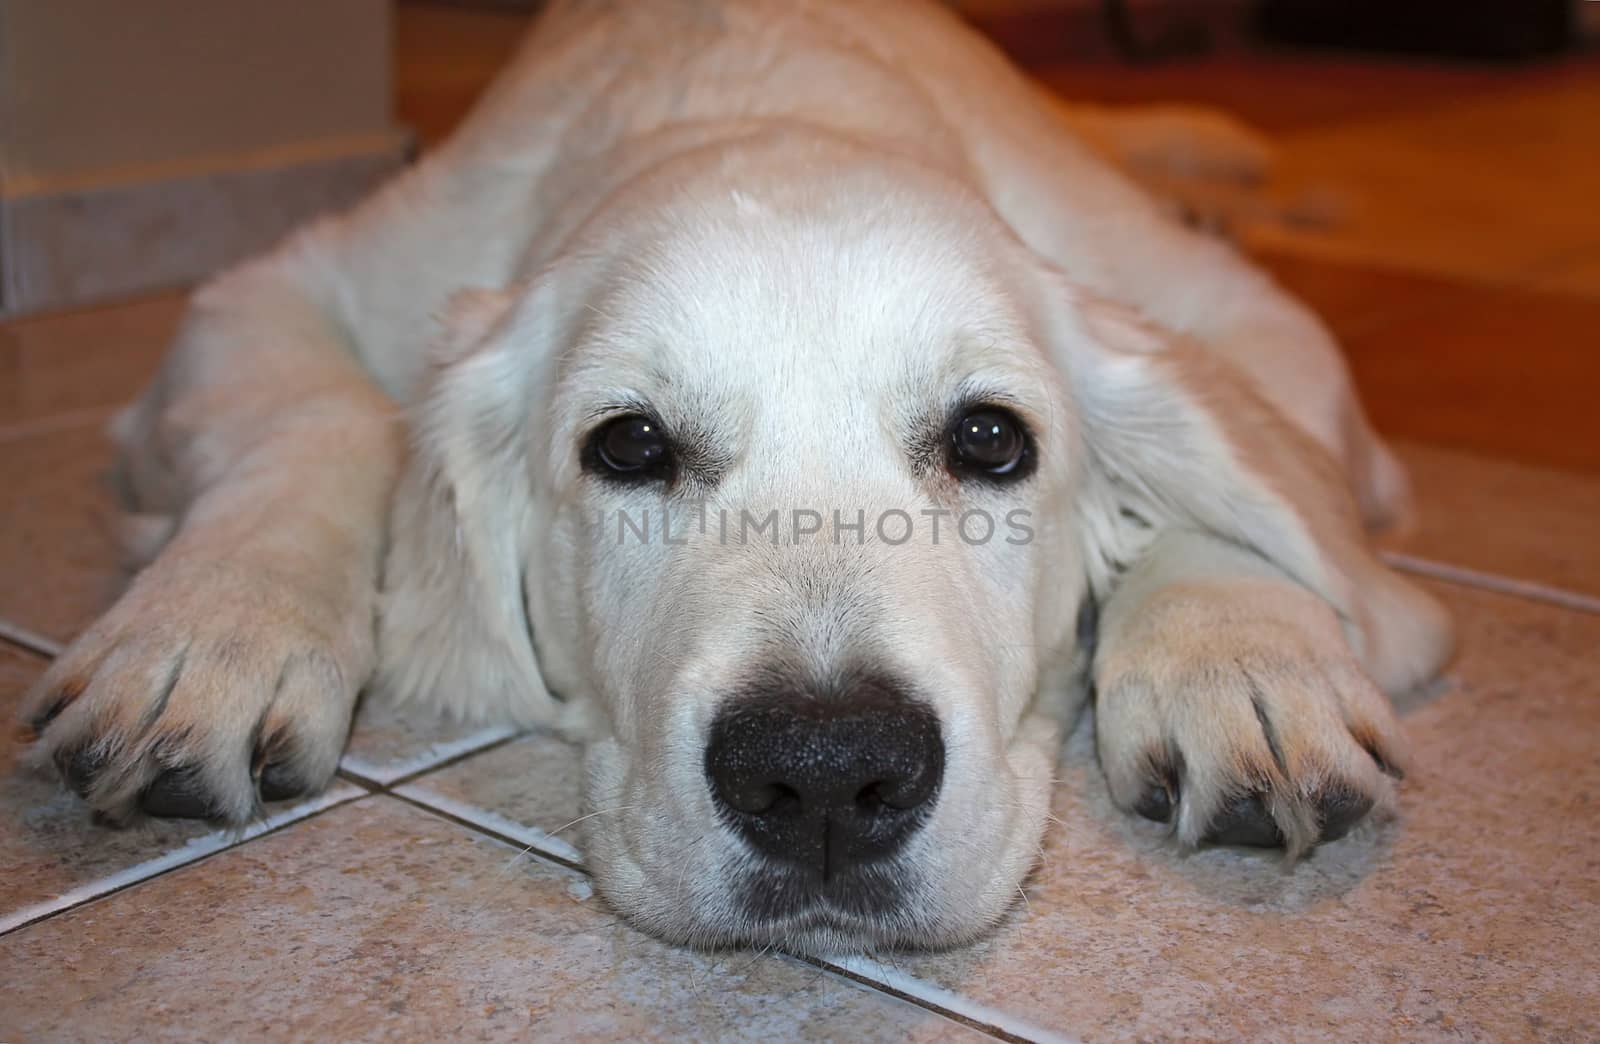 Labrador puppy golden retriever lying on the floor.